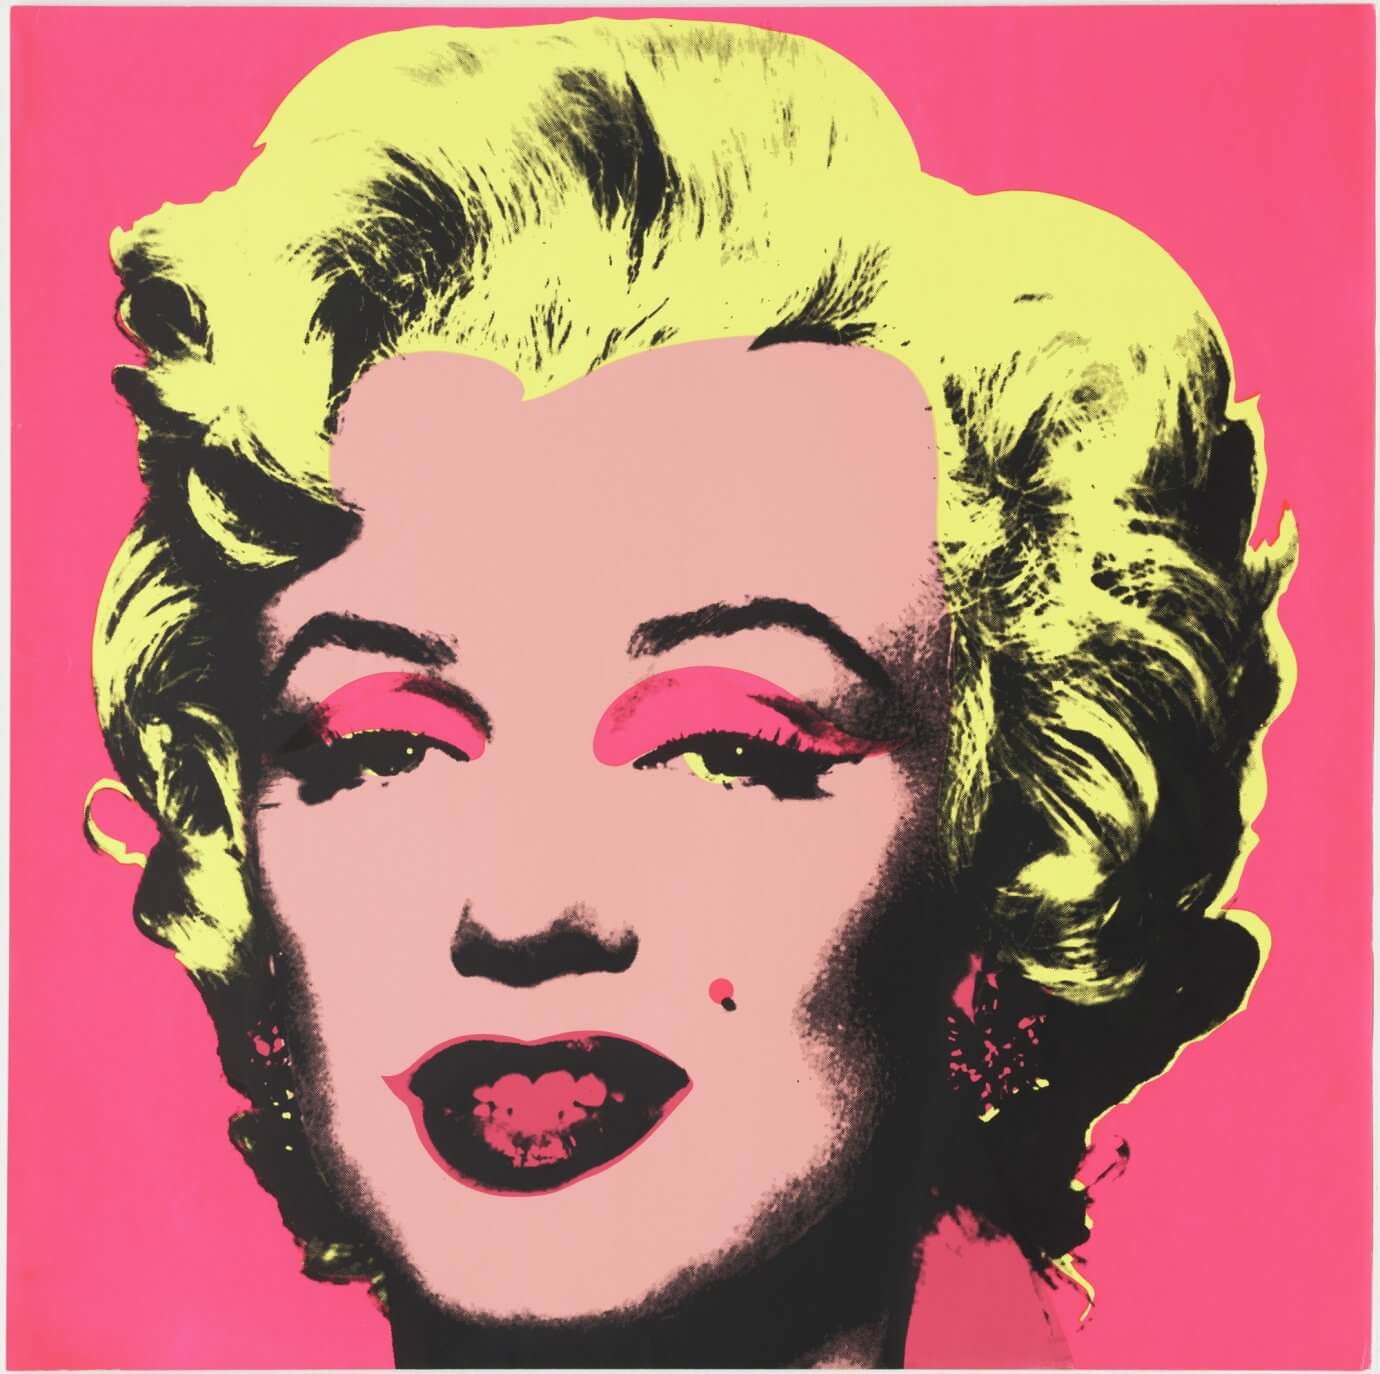 Neon pop art of Marilyn Monroe by Andy Warhol